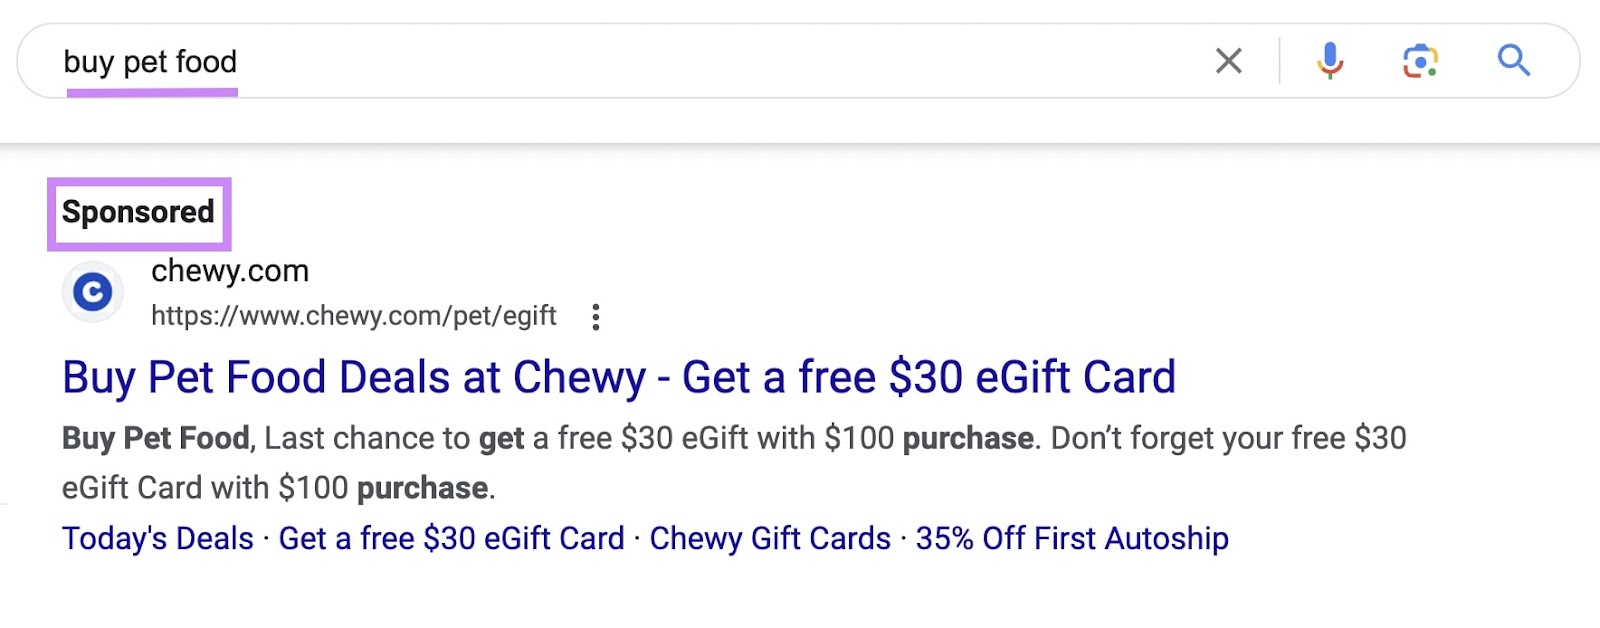 Google ad for the “buy pet food" keyword